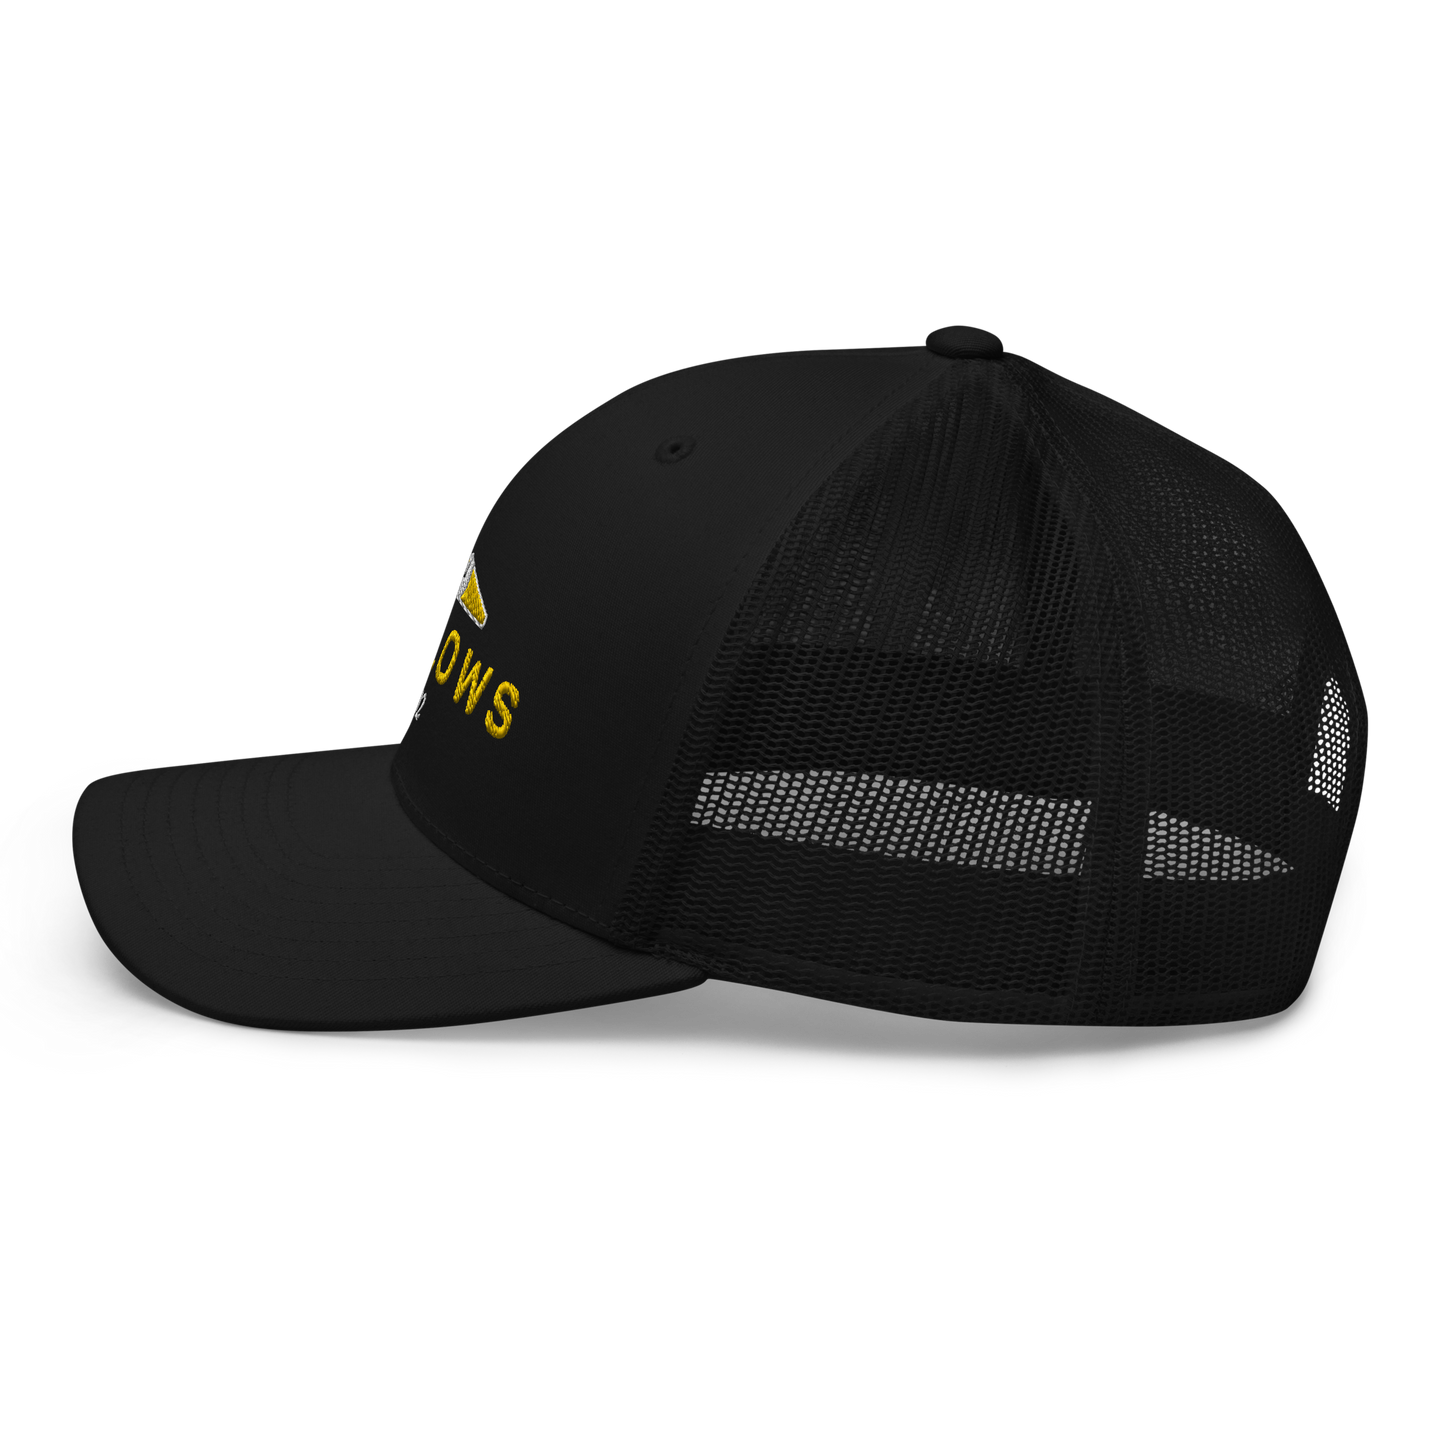 Yellows Hat